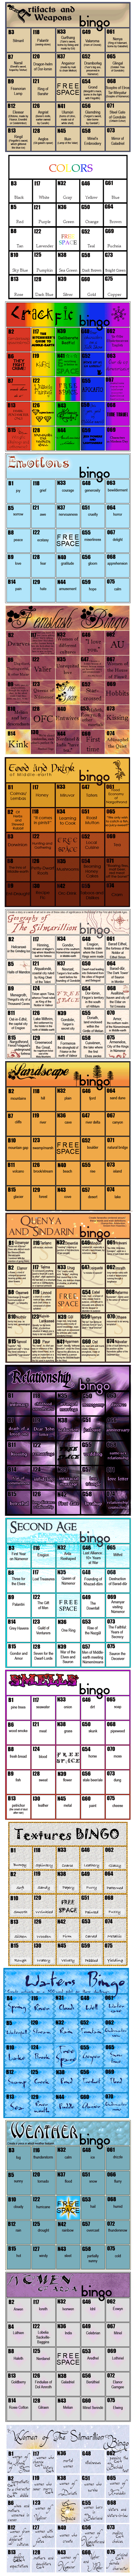 Adlanth's Bingo Cards